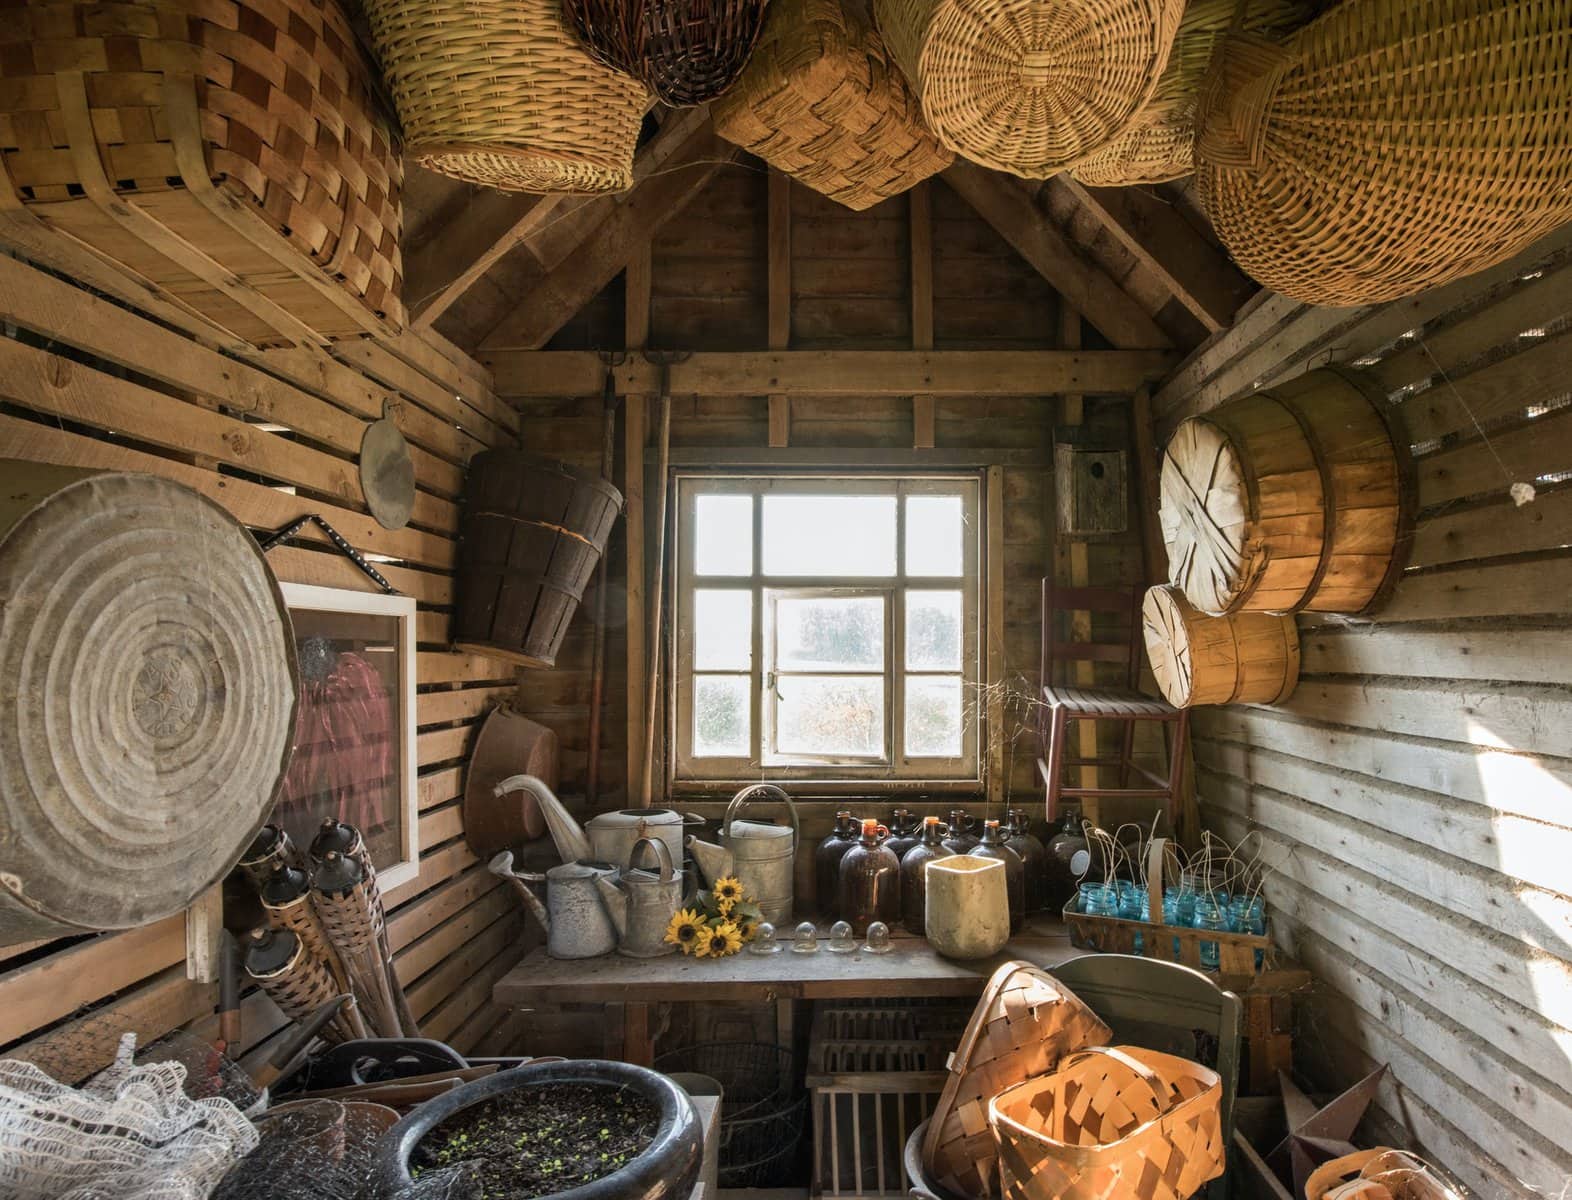 Wooden Shed Interior Hanging Baskets